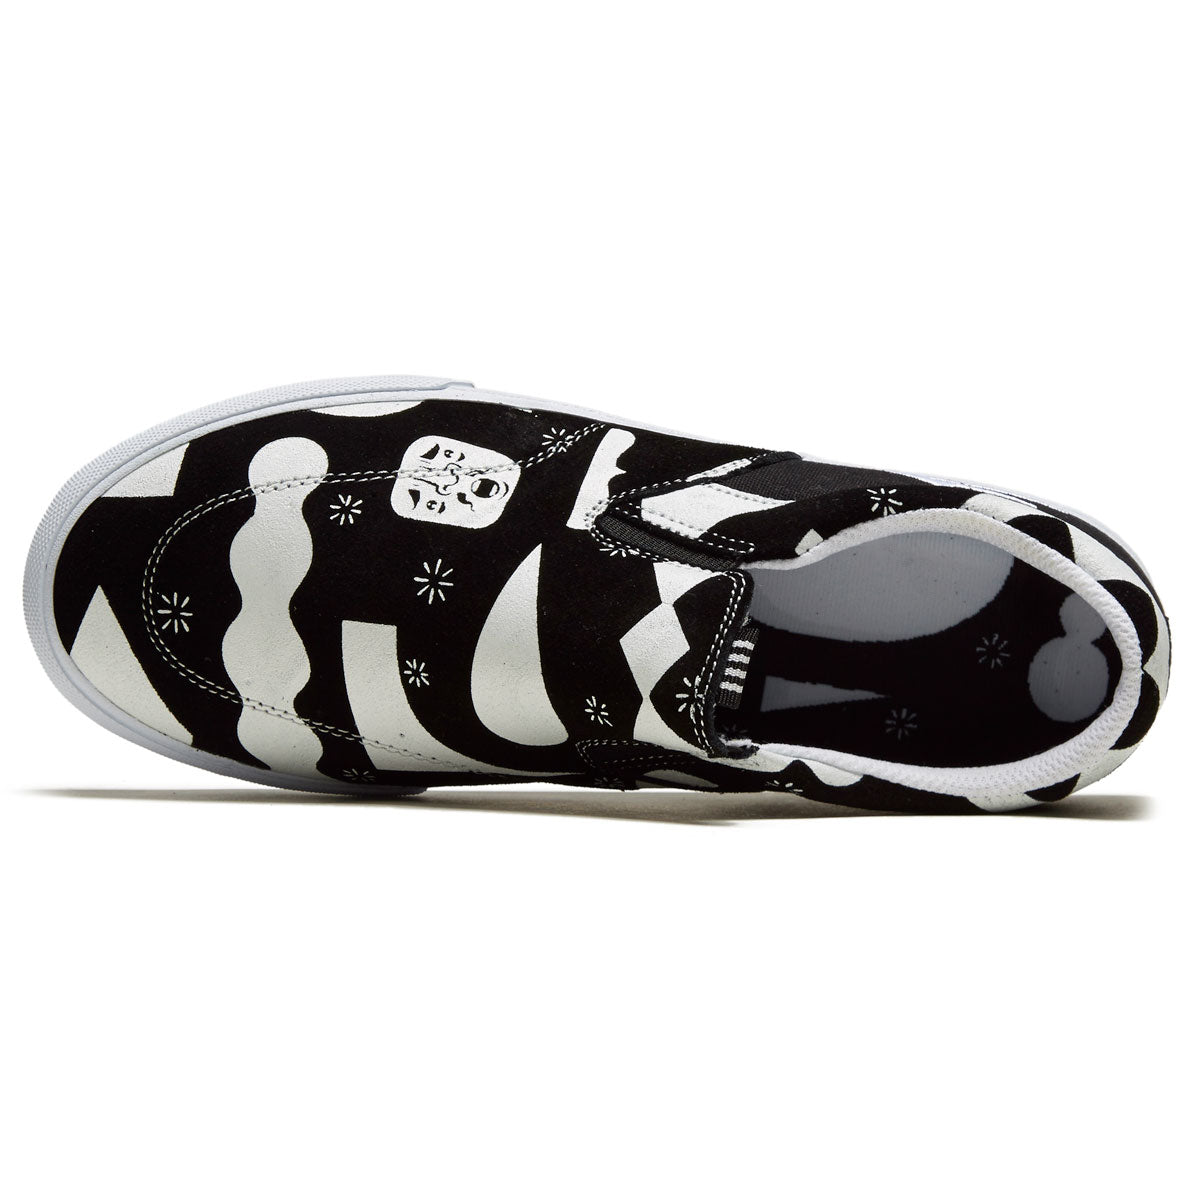 Lakai Owen Vlk Shoes - Black/White Suede image 3